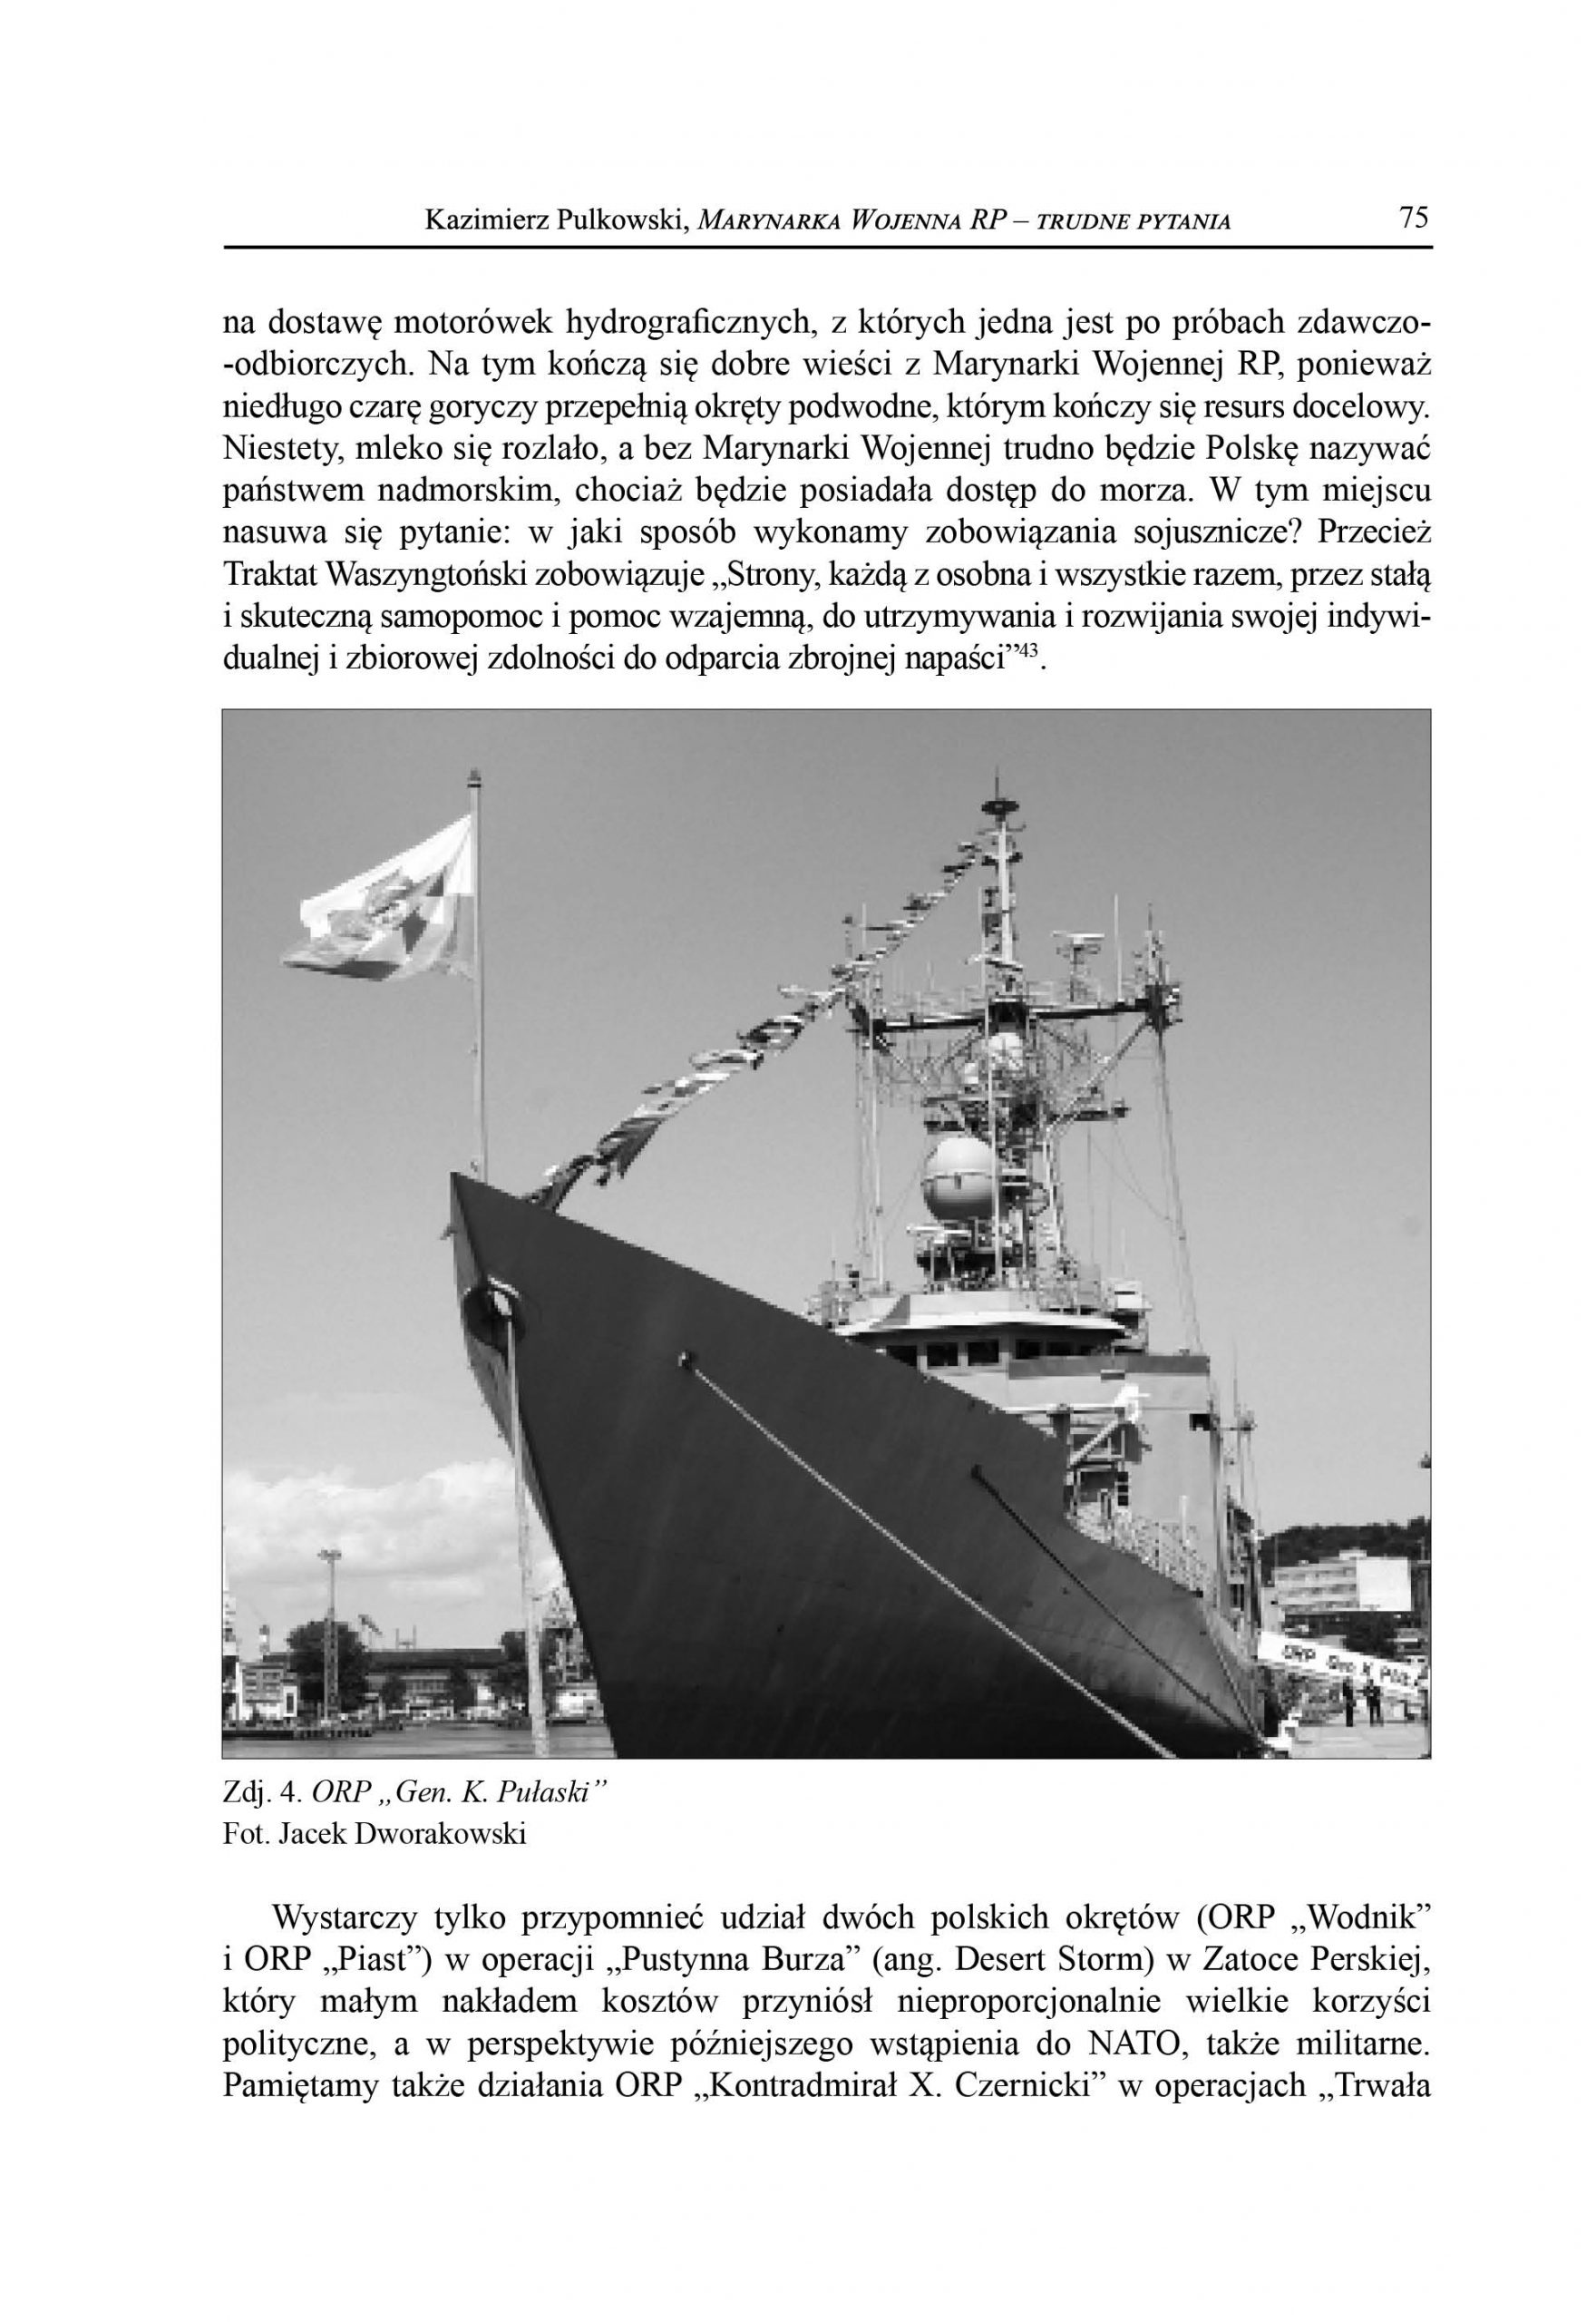 Marynarka Wojenna RP - trudne pytania